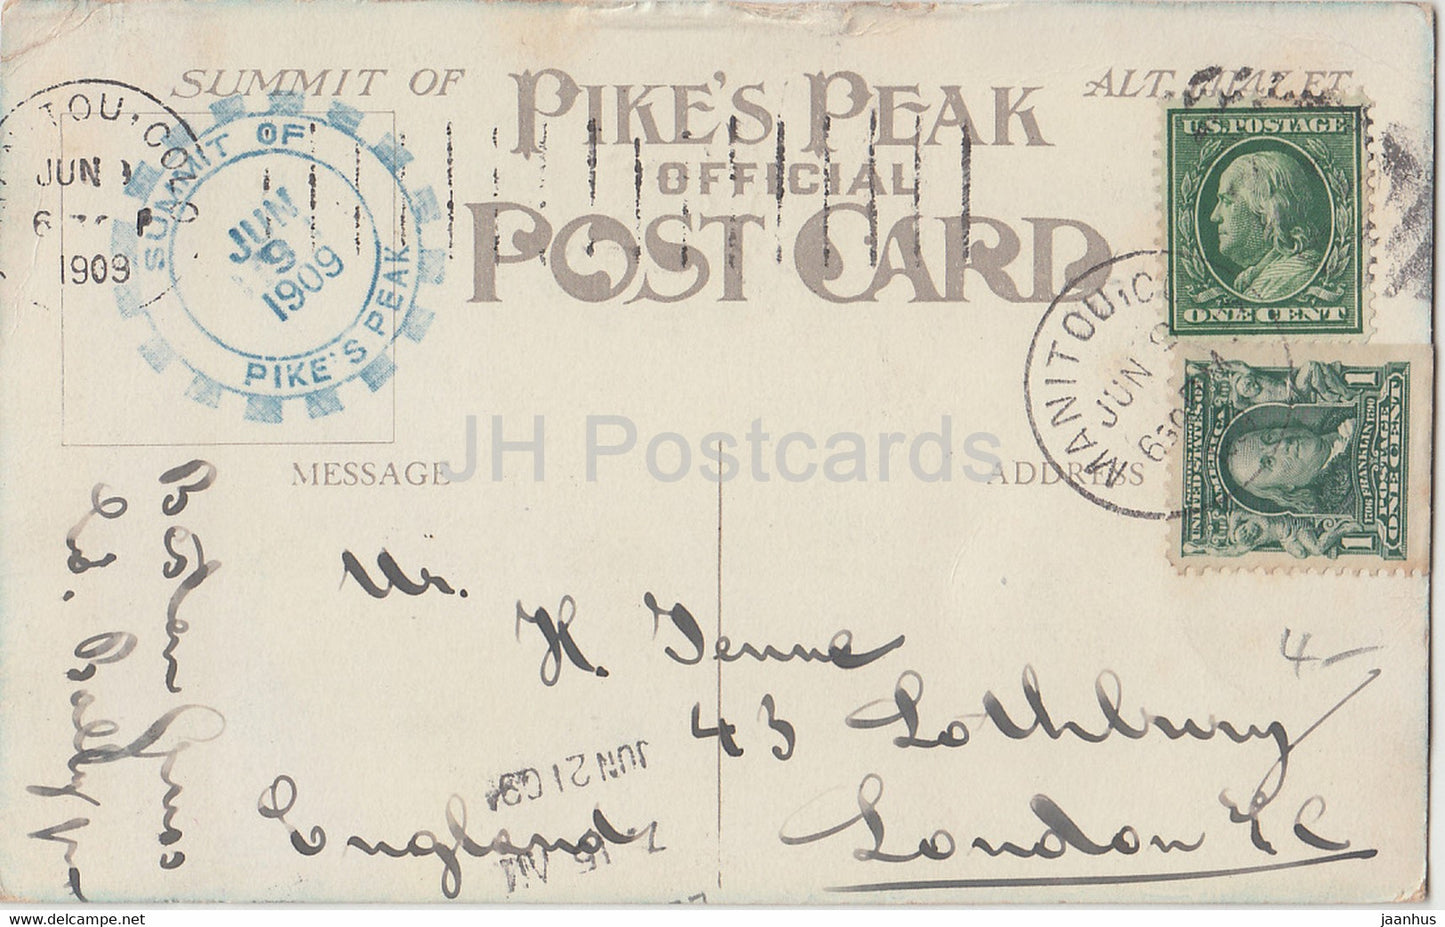 Woodland Park Near Halfway House - Pike's Peak Cog Road - train - carte postale ancienne - 1909 - États-Unis - USA - utilisé